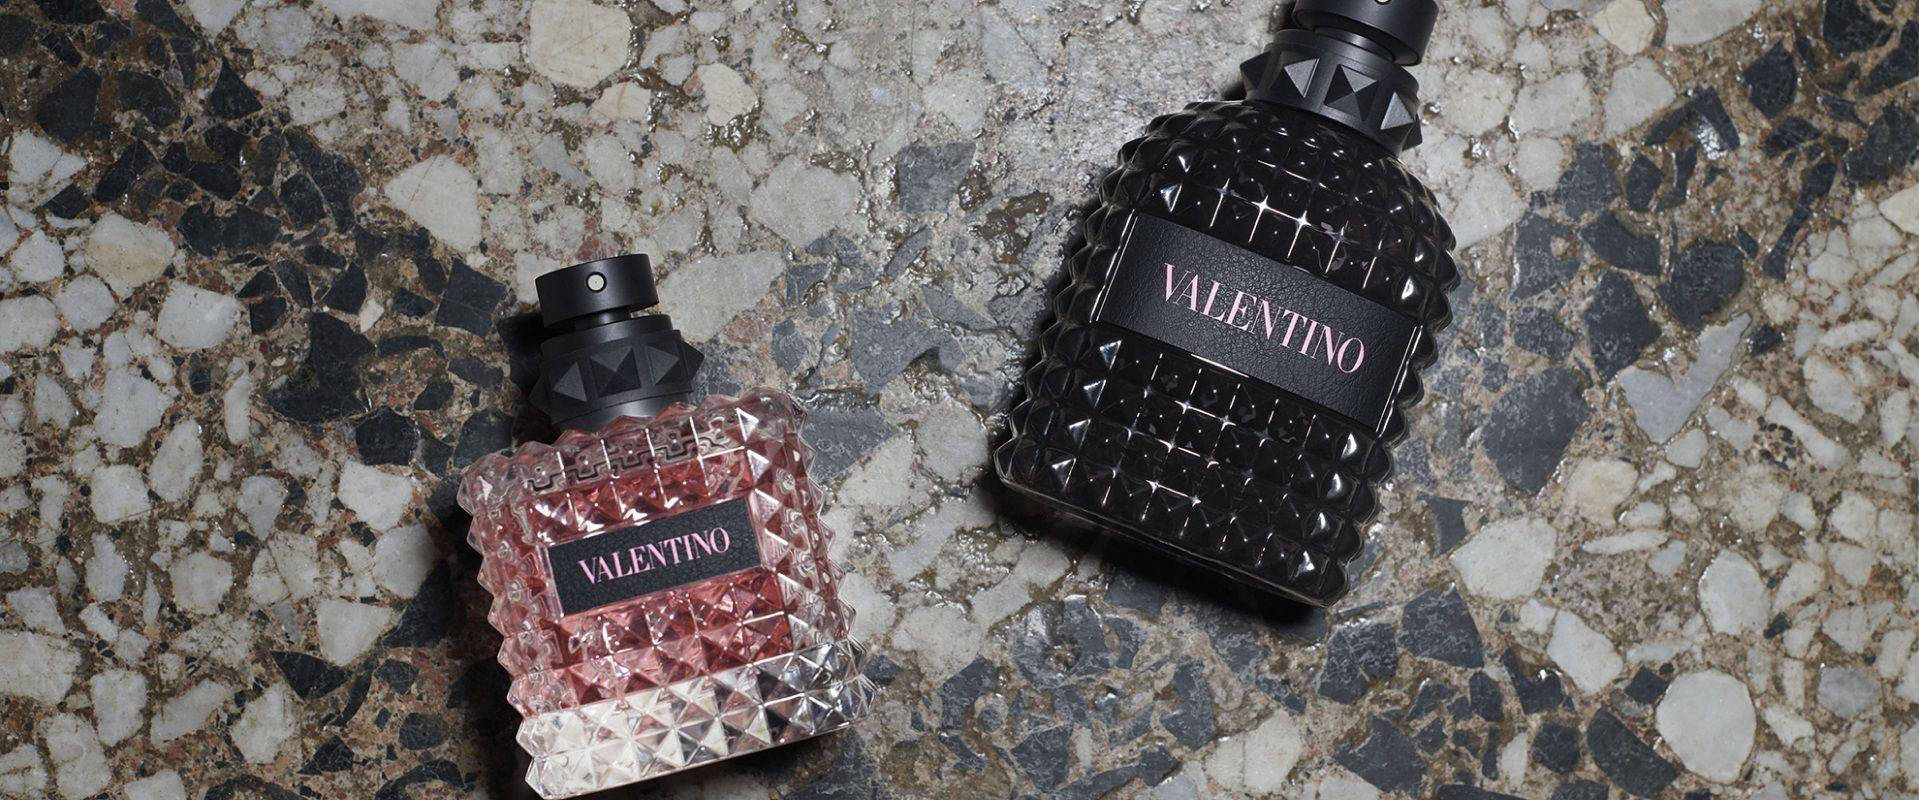 Valentino Perfume Bottles Wallpaper